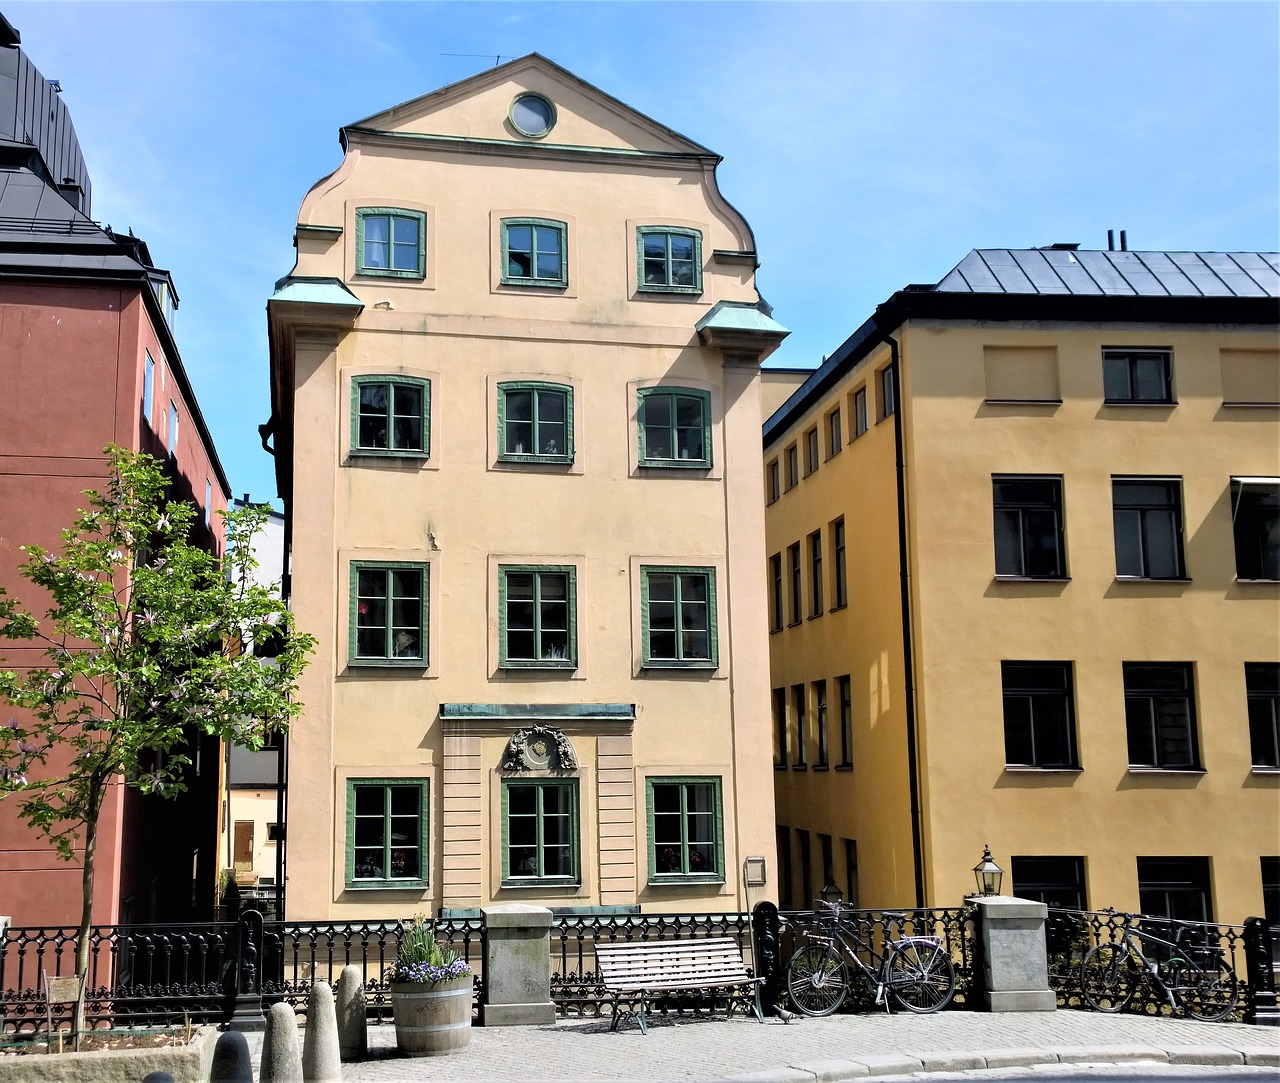 stockholm building architecture free photo